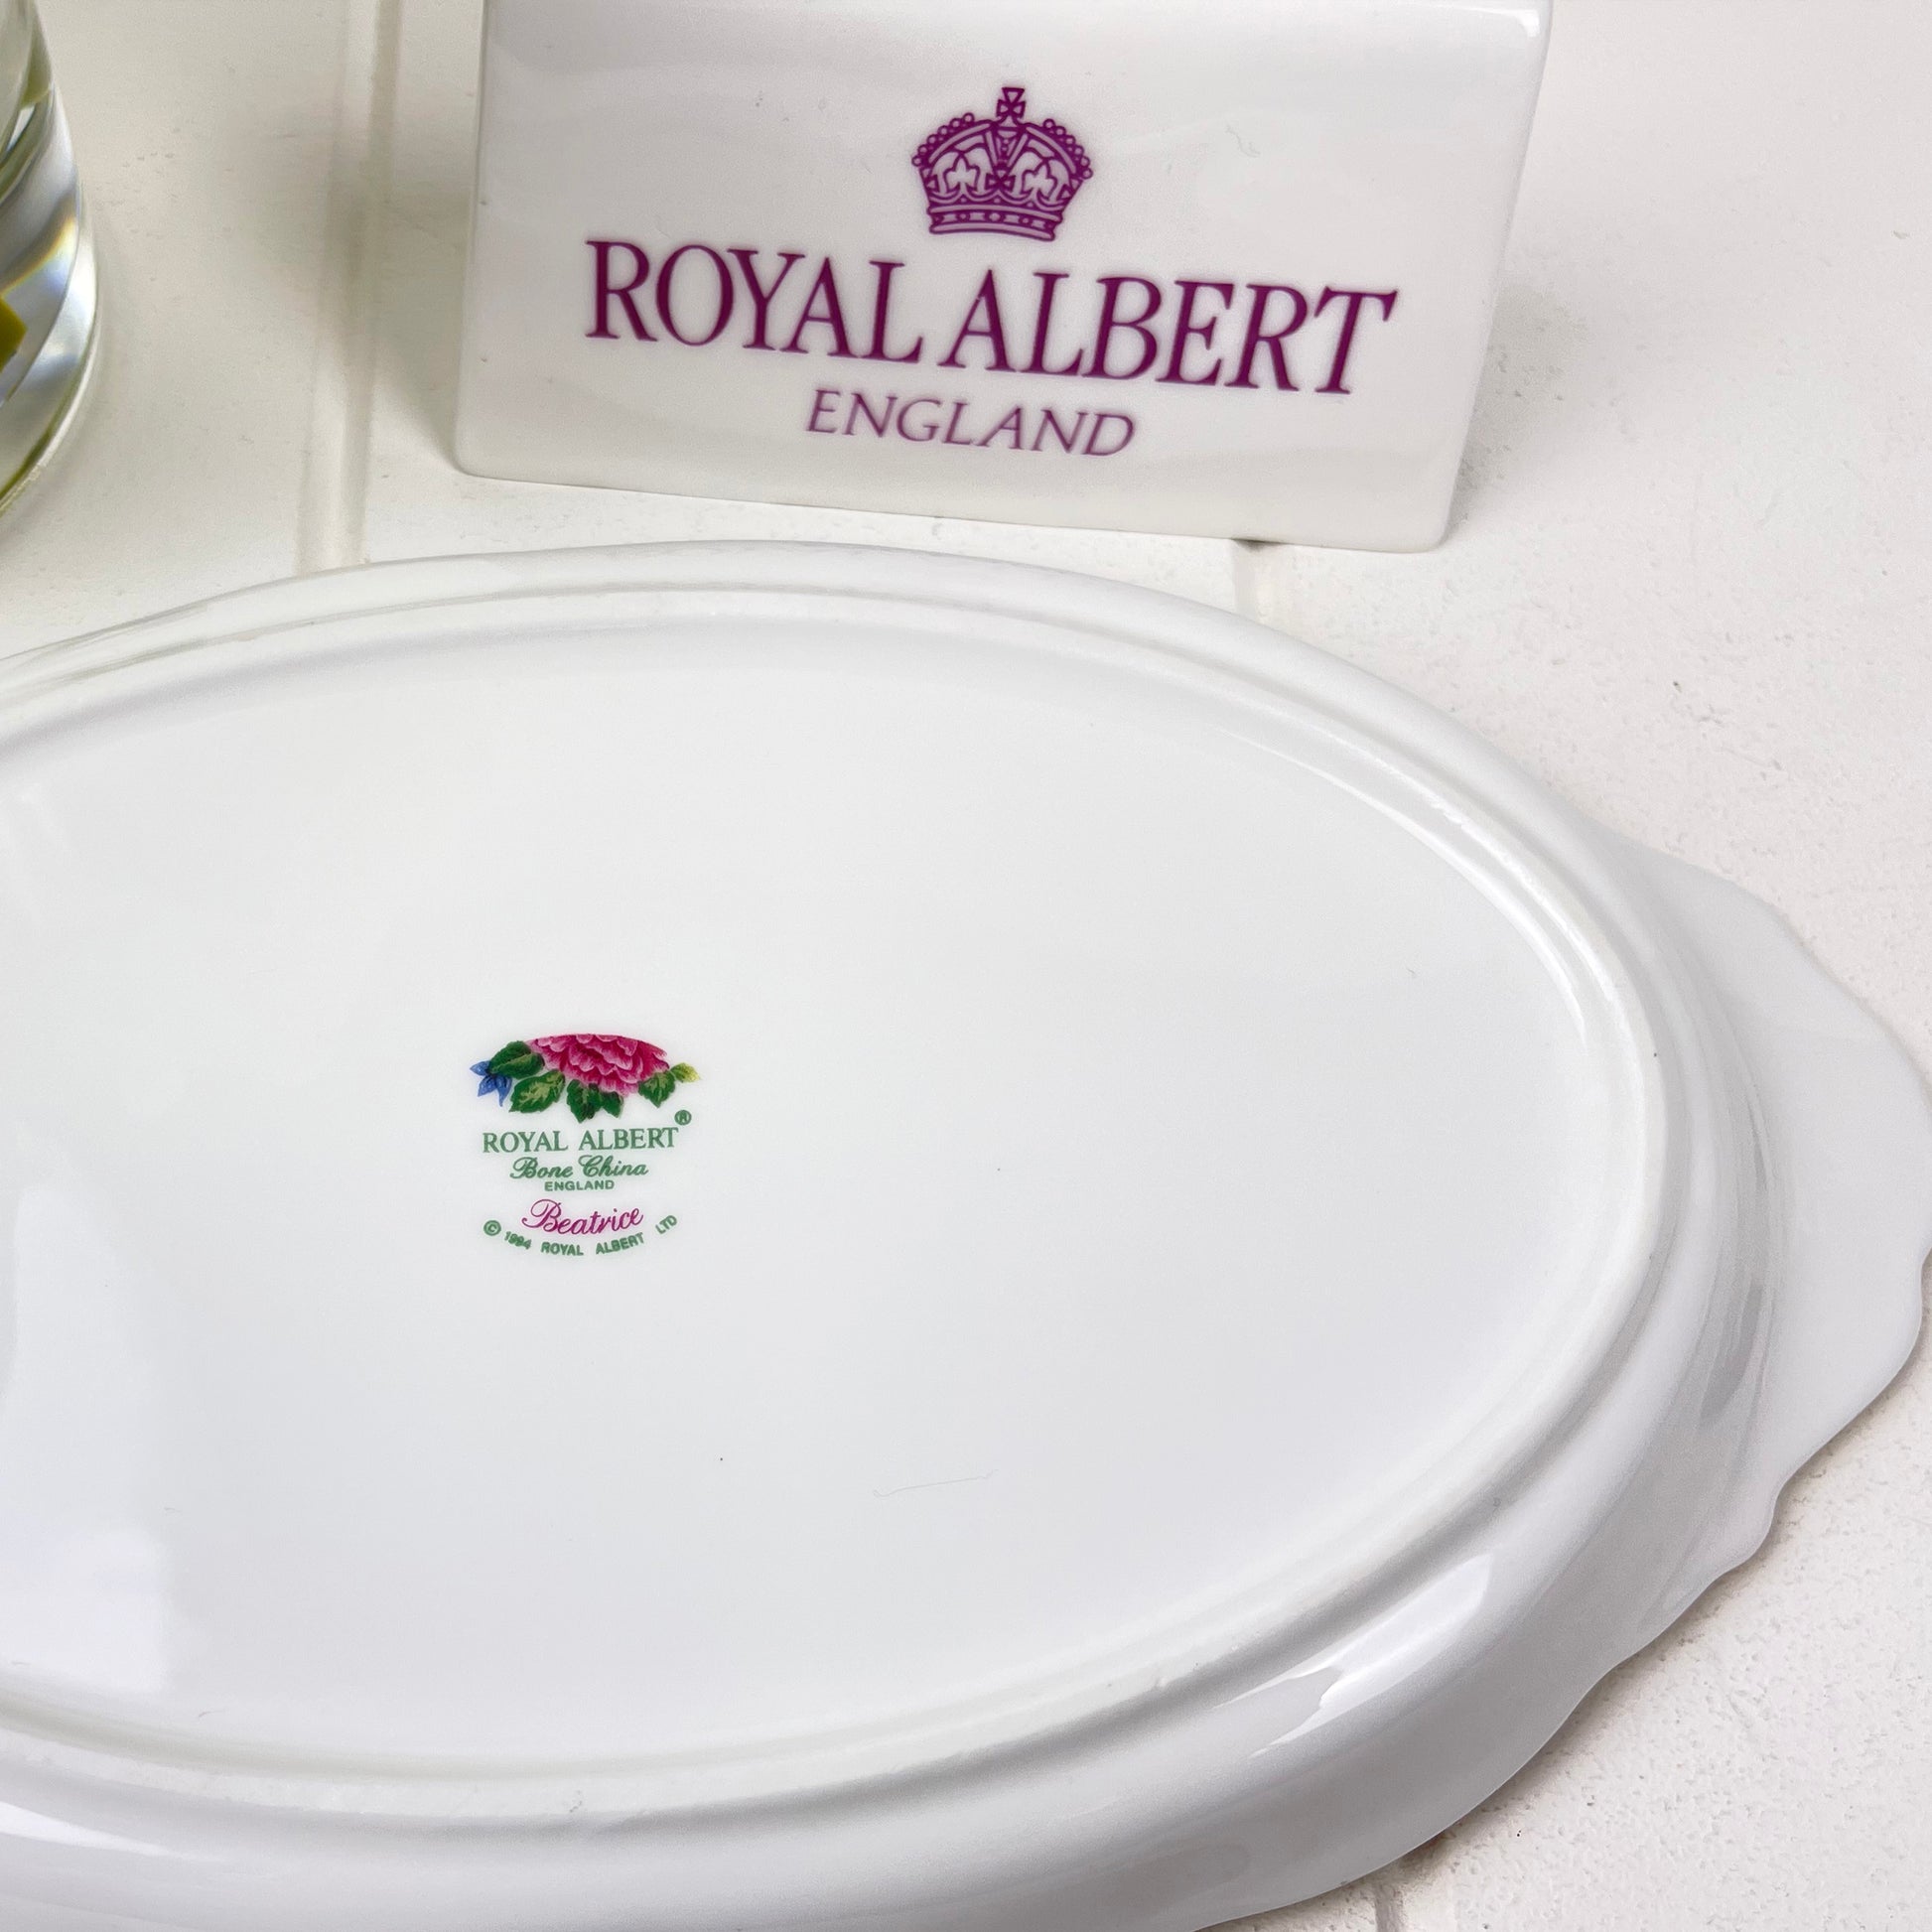 Royal Albert Beatrice Regal/Biscuit Tray